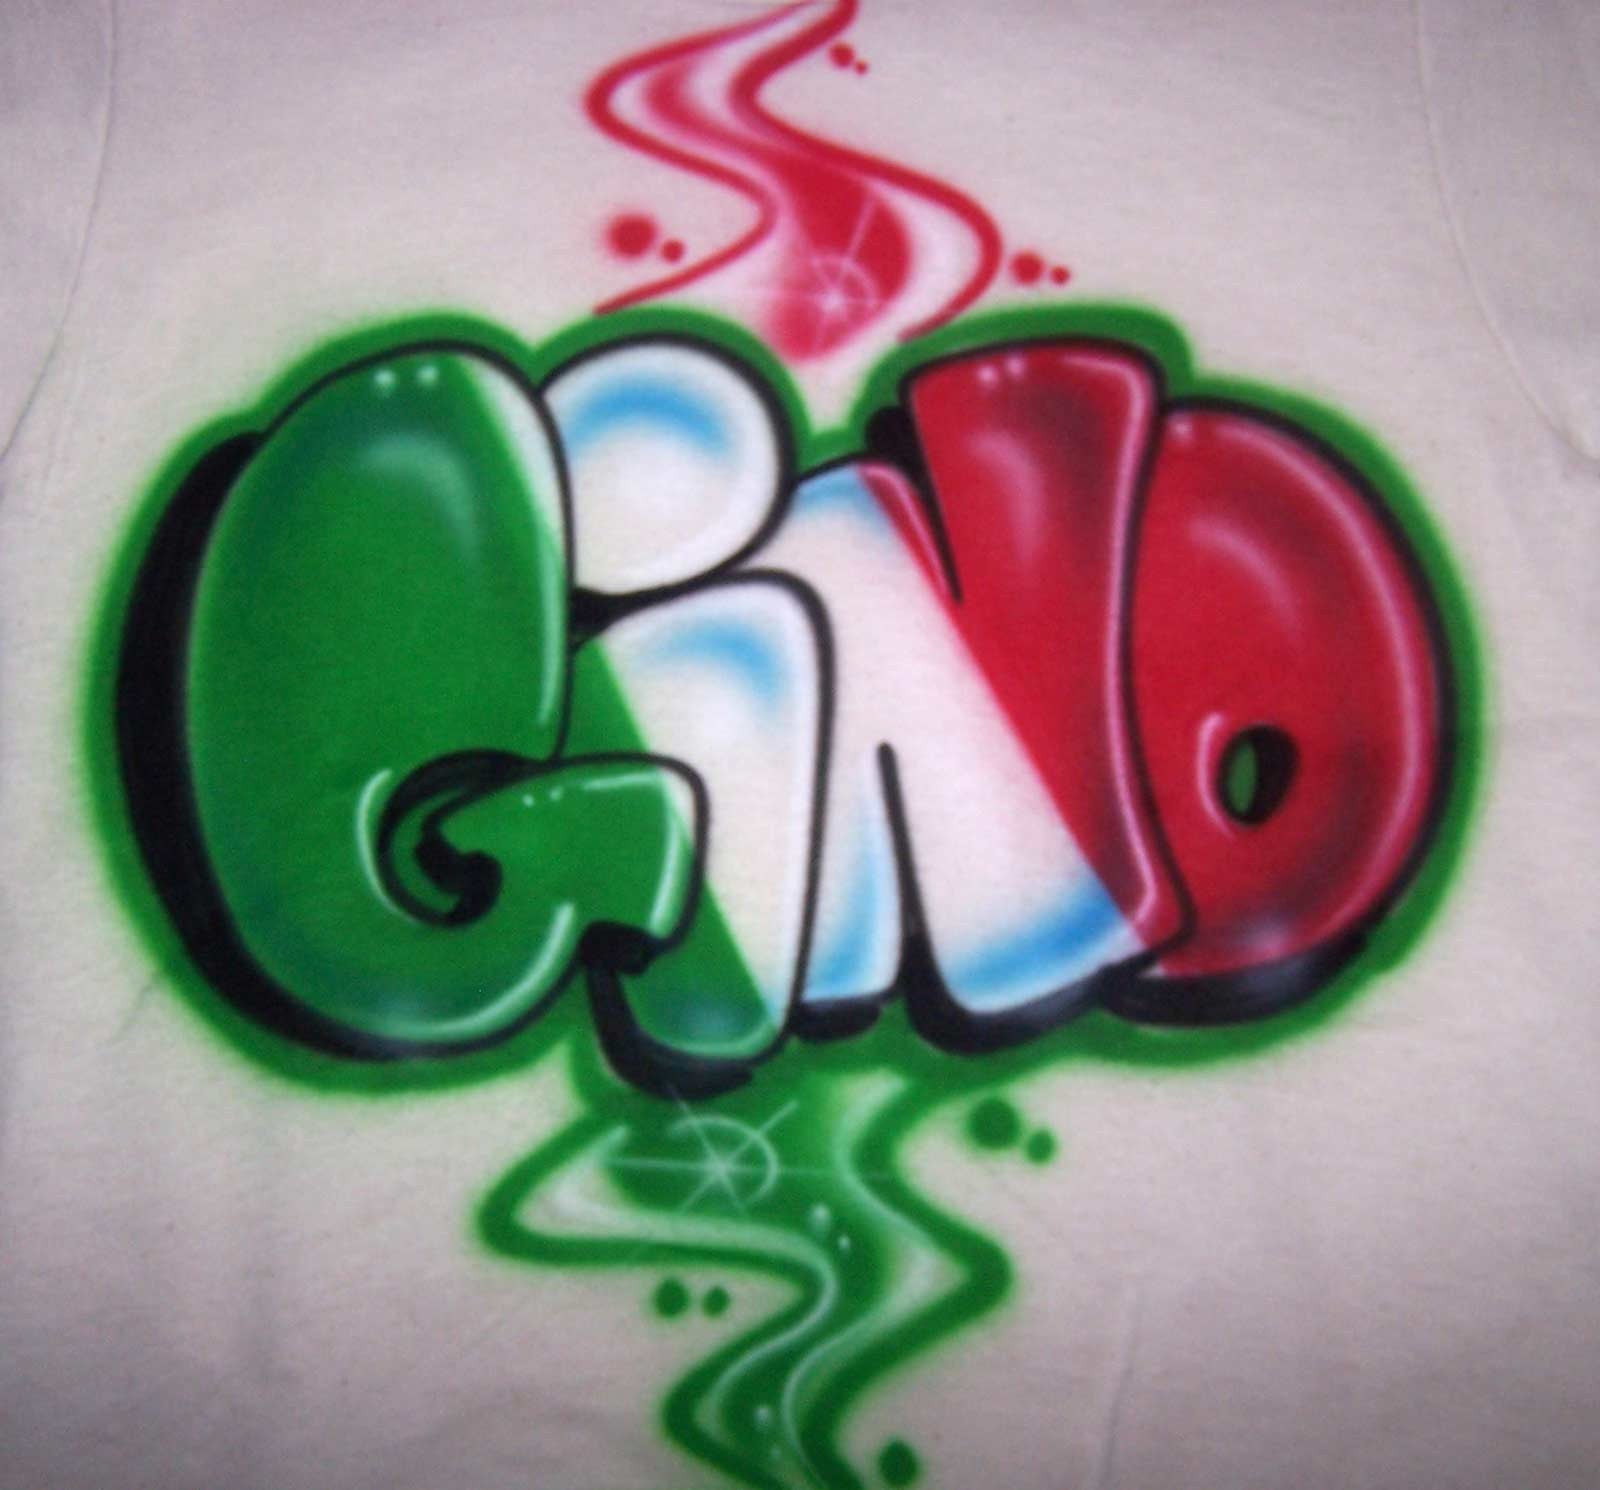 Airbrushed graffiti Italian flag personalized shirt